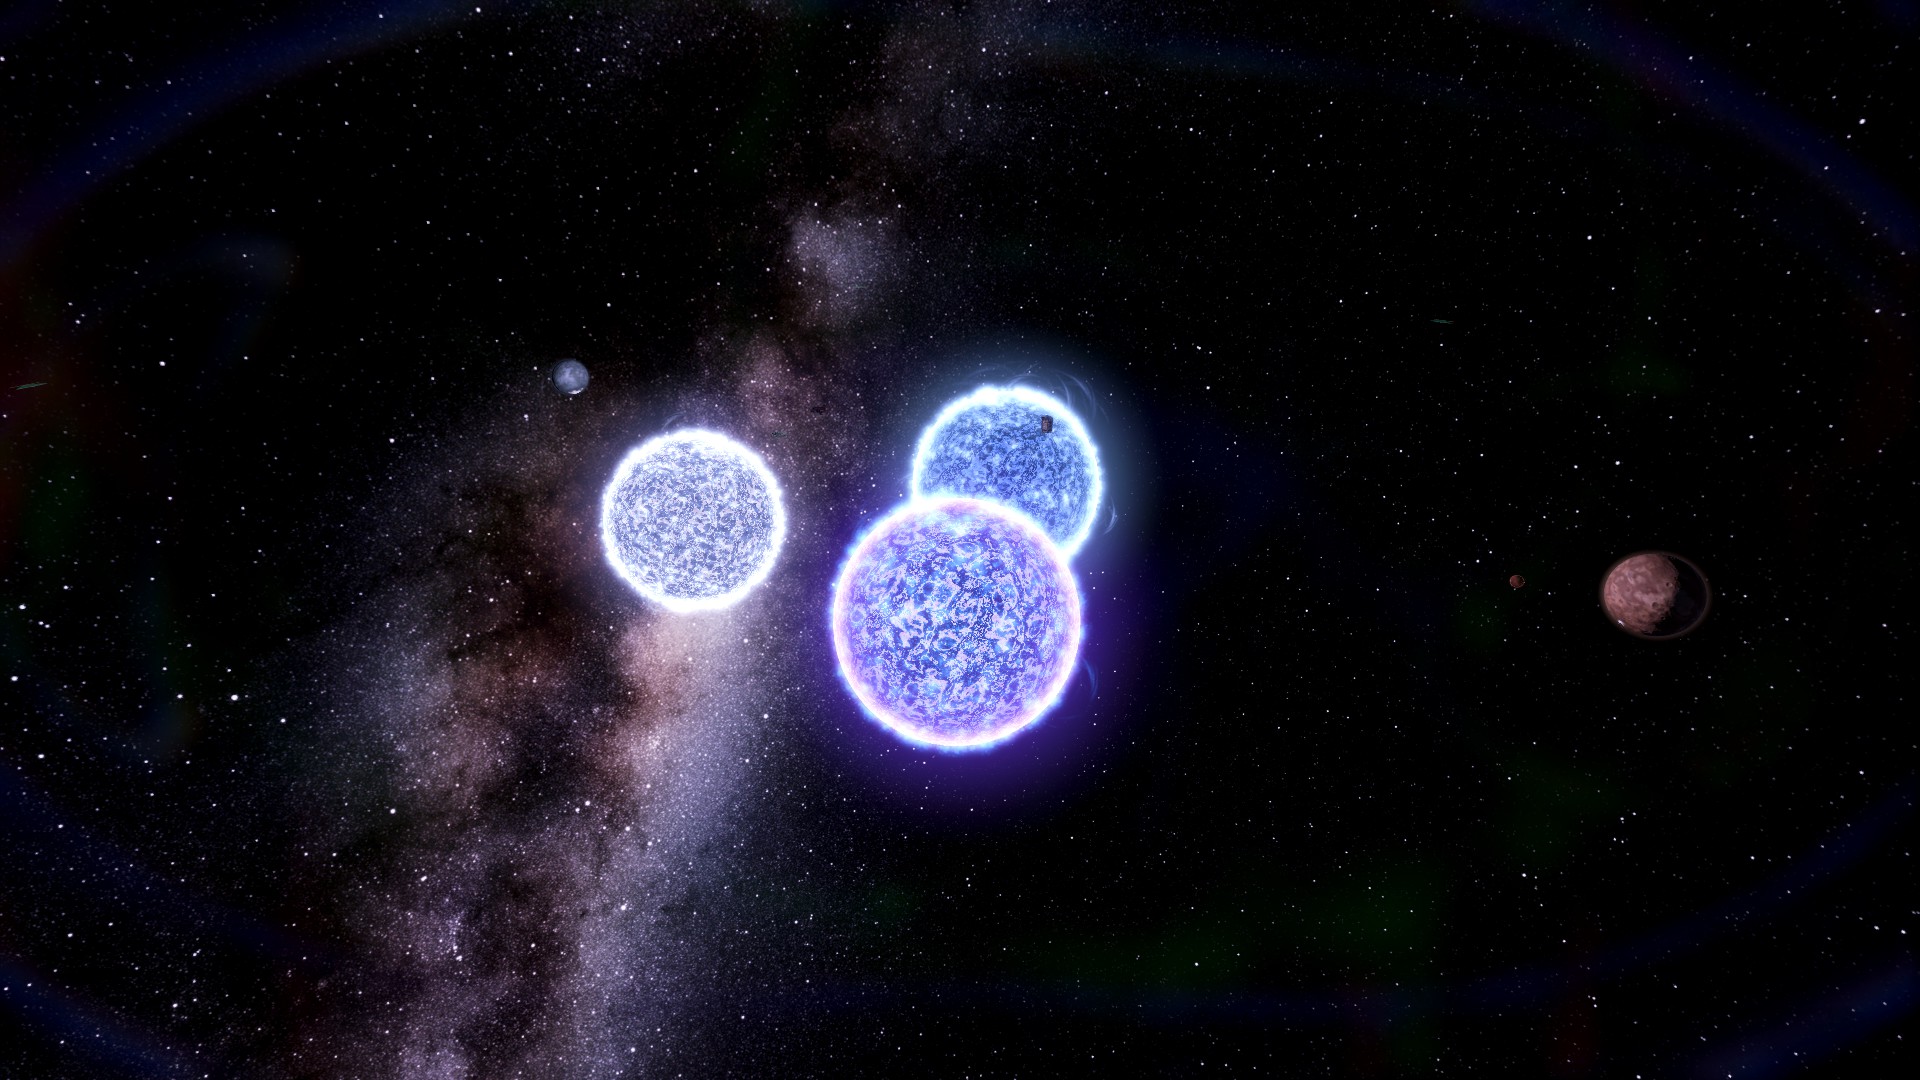 Art: Triple stellar system